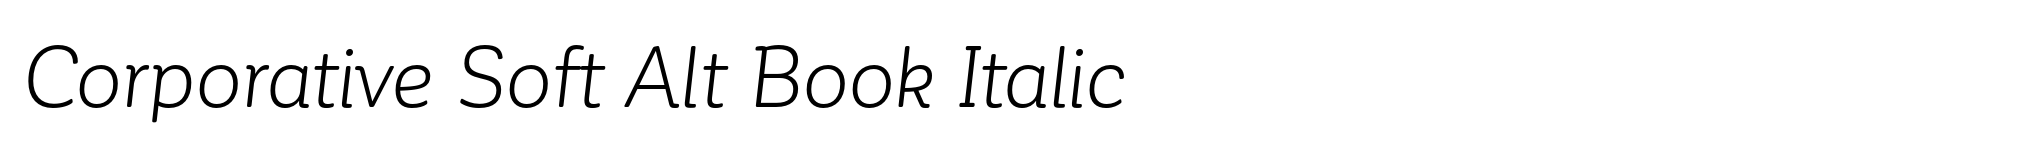 Corporative Soft Alt Book Italic image